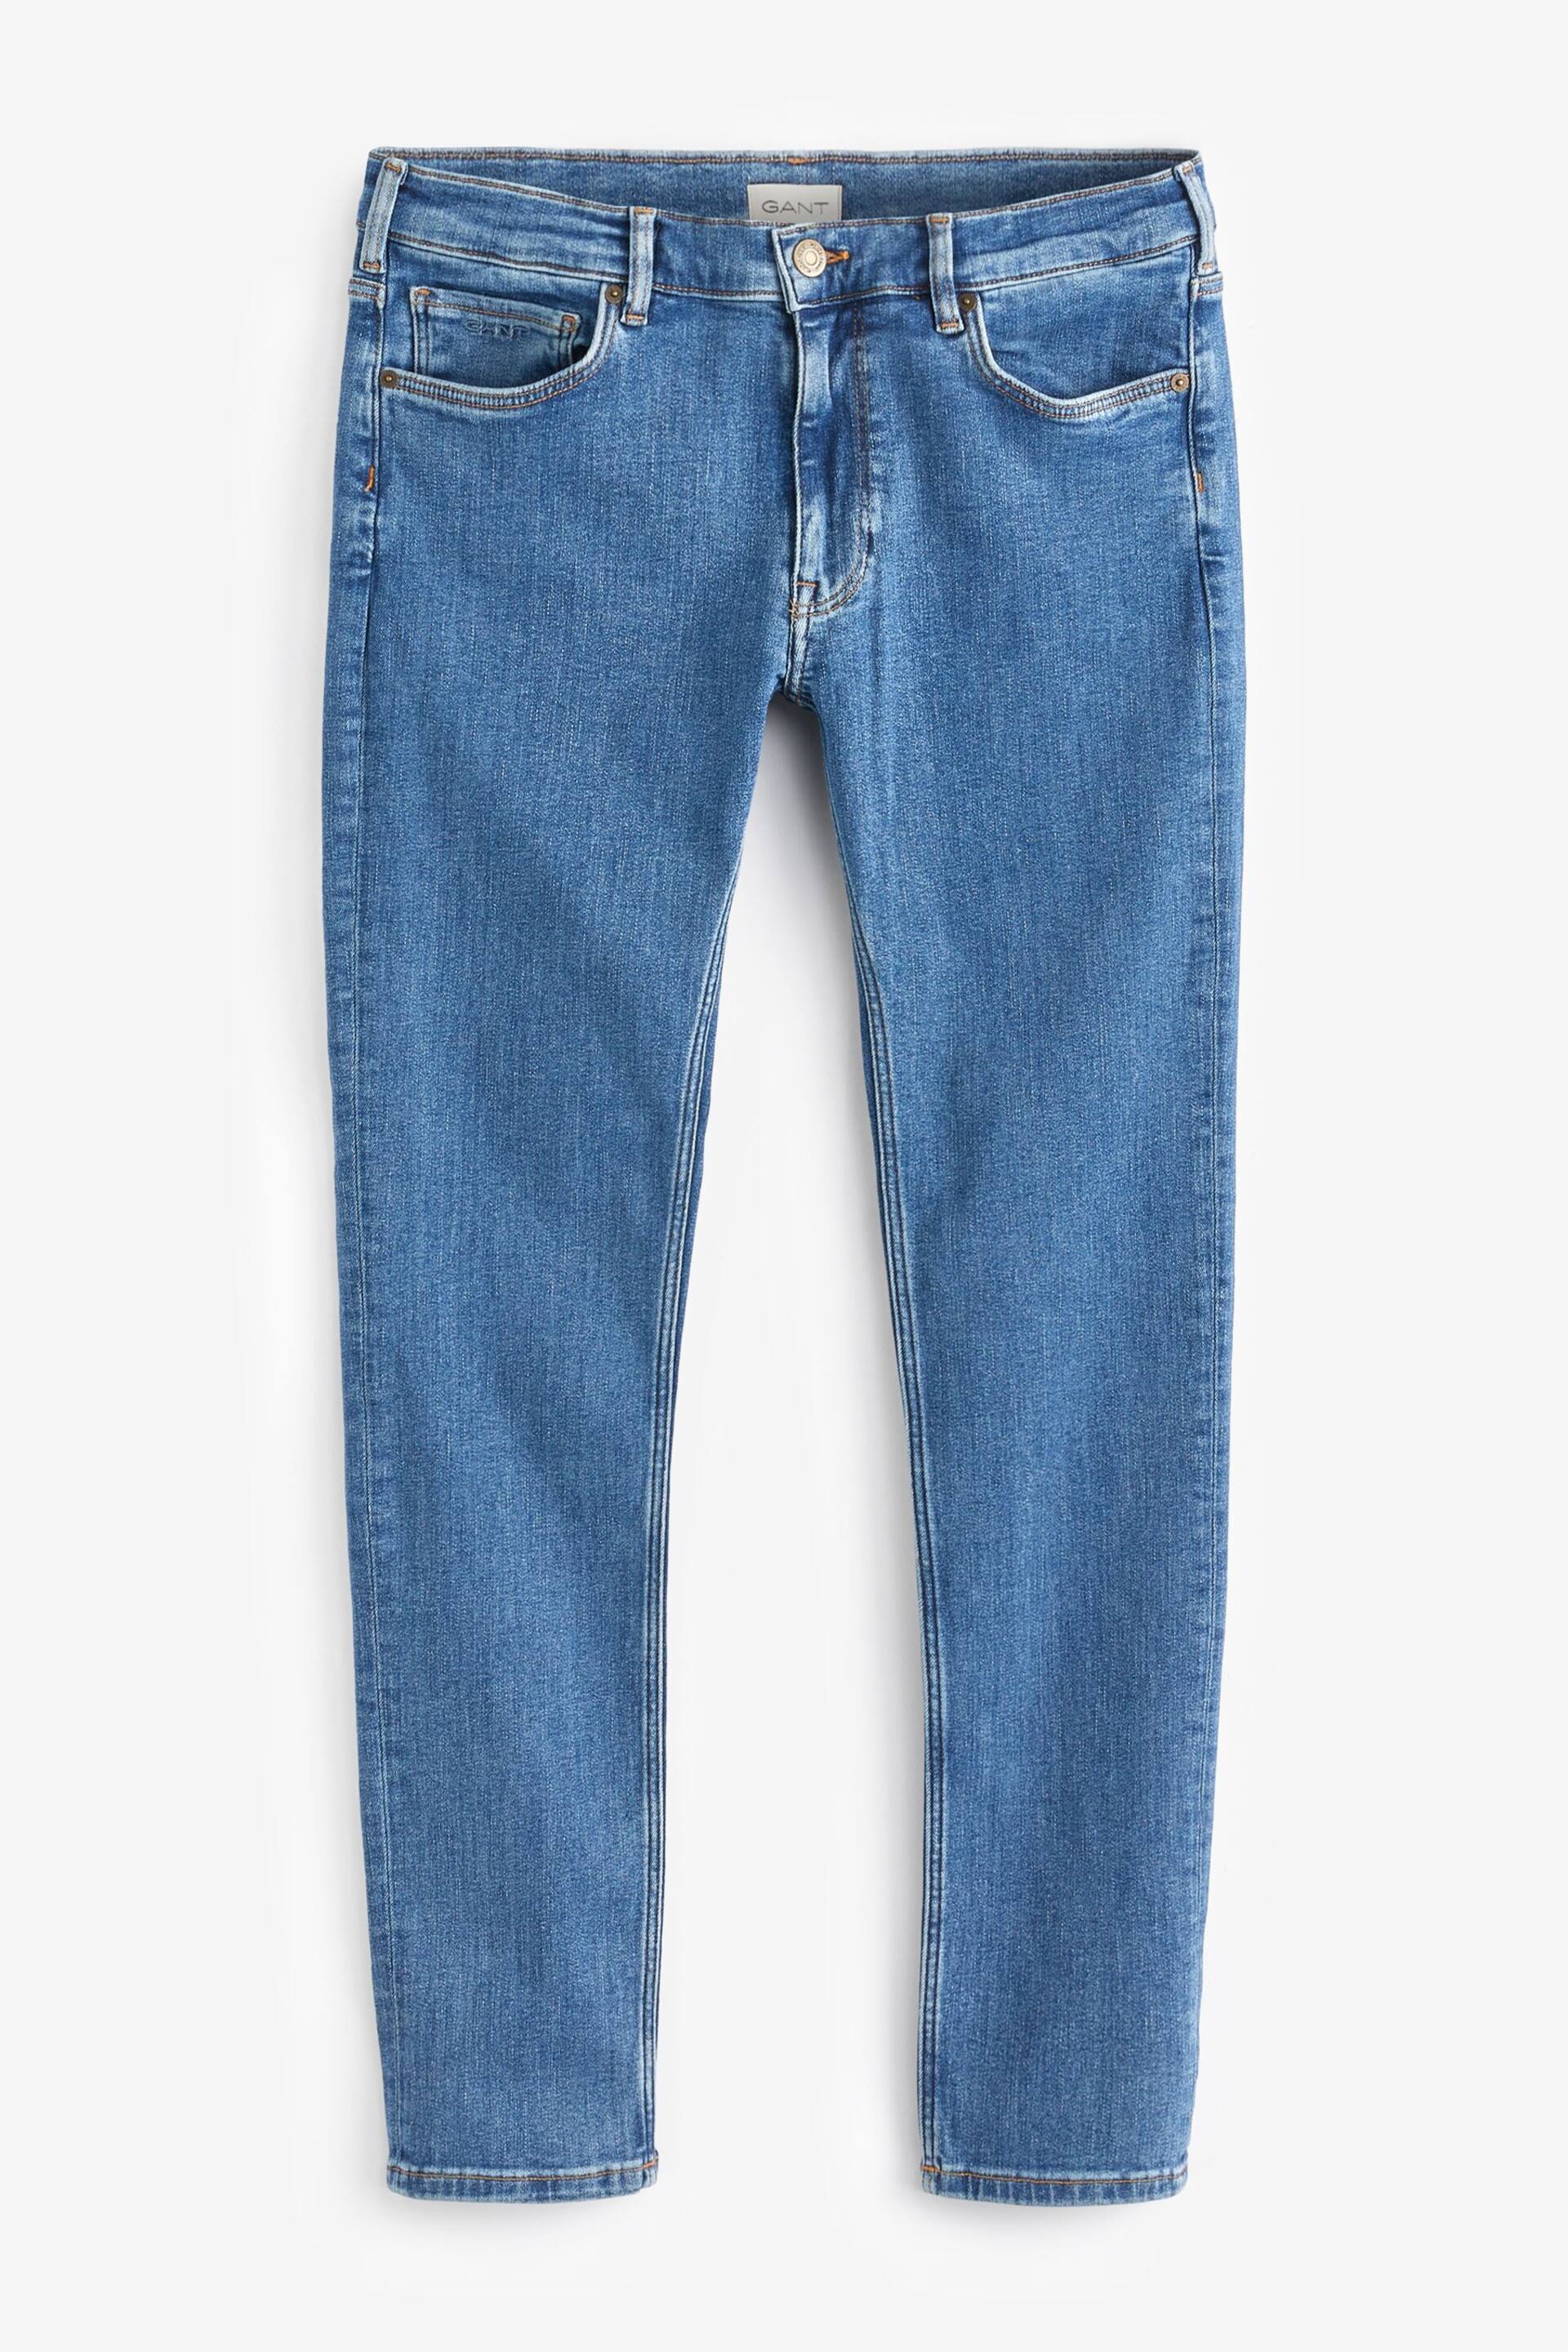 GANTTeen Boys Blue Slim Fit Jeans - Image 1 of 3